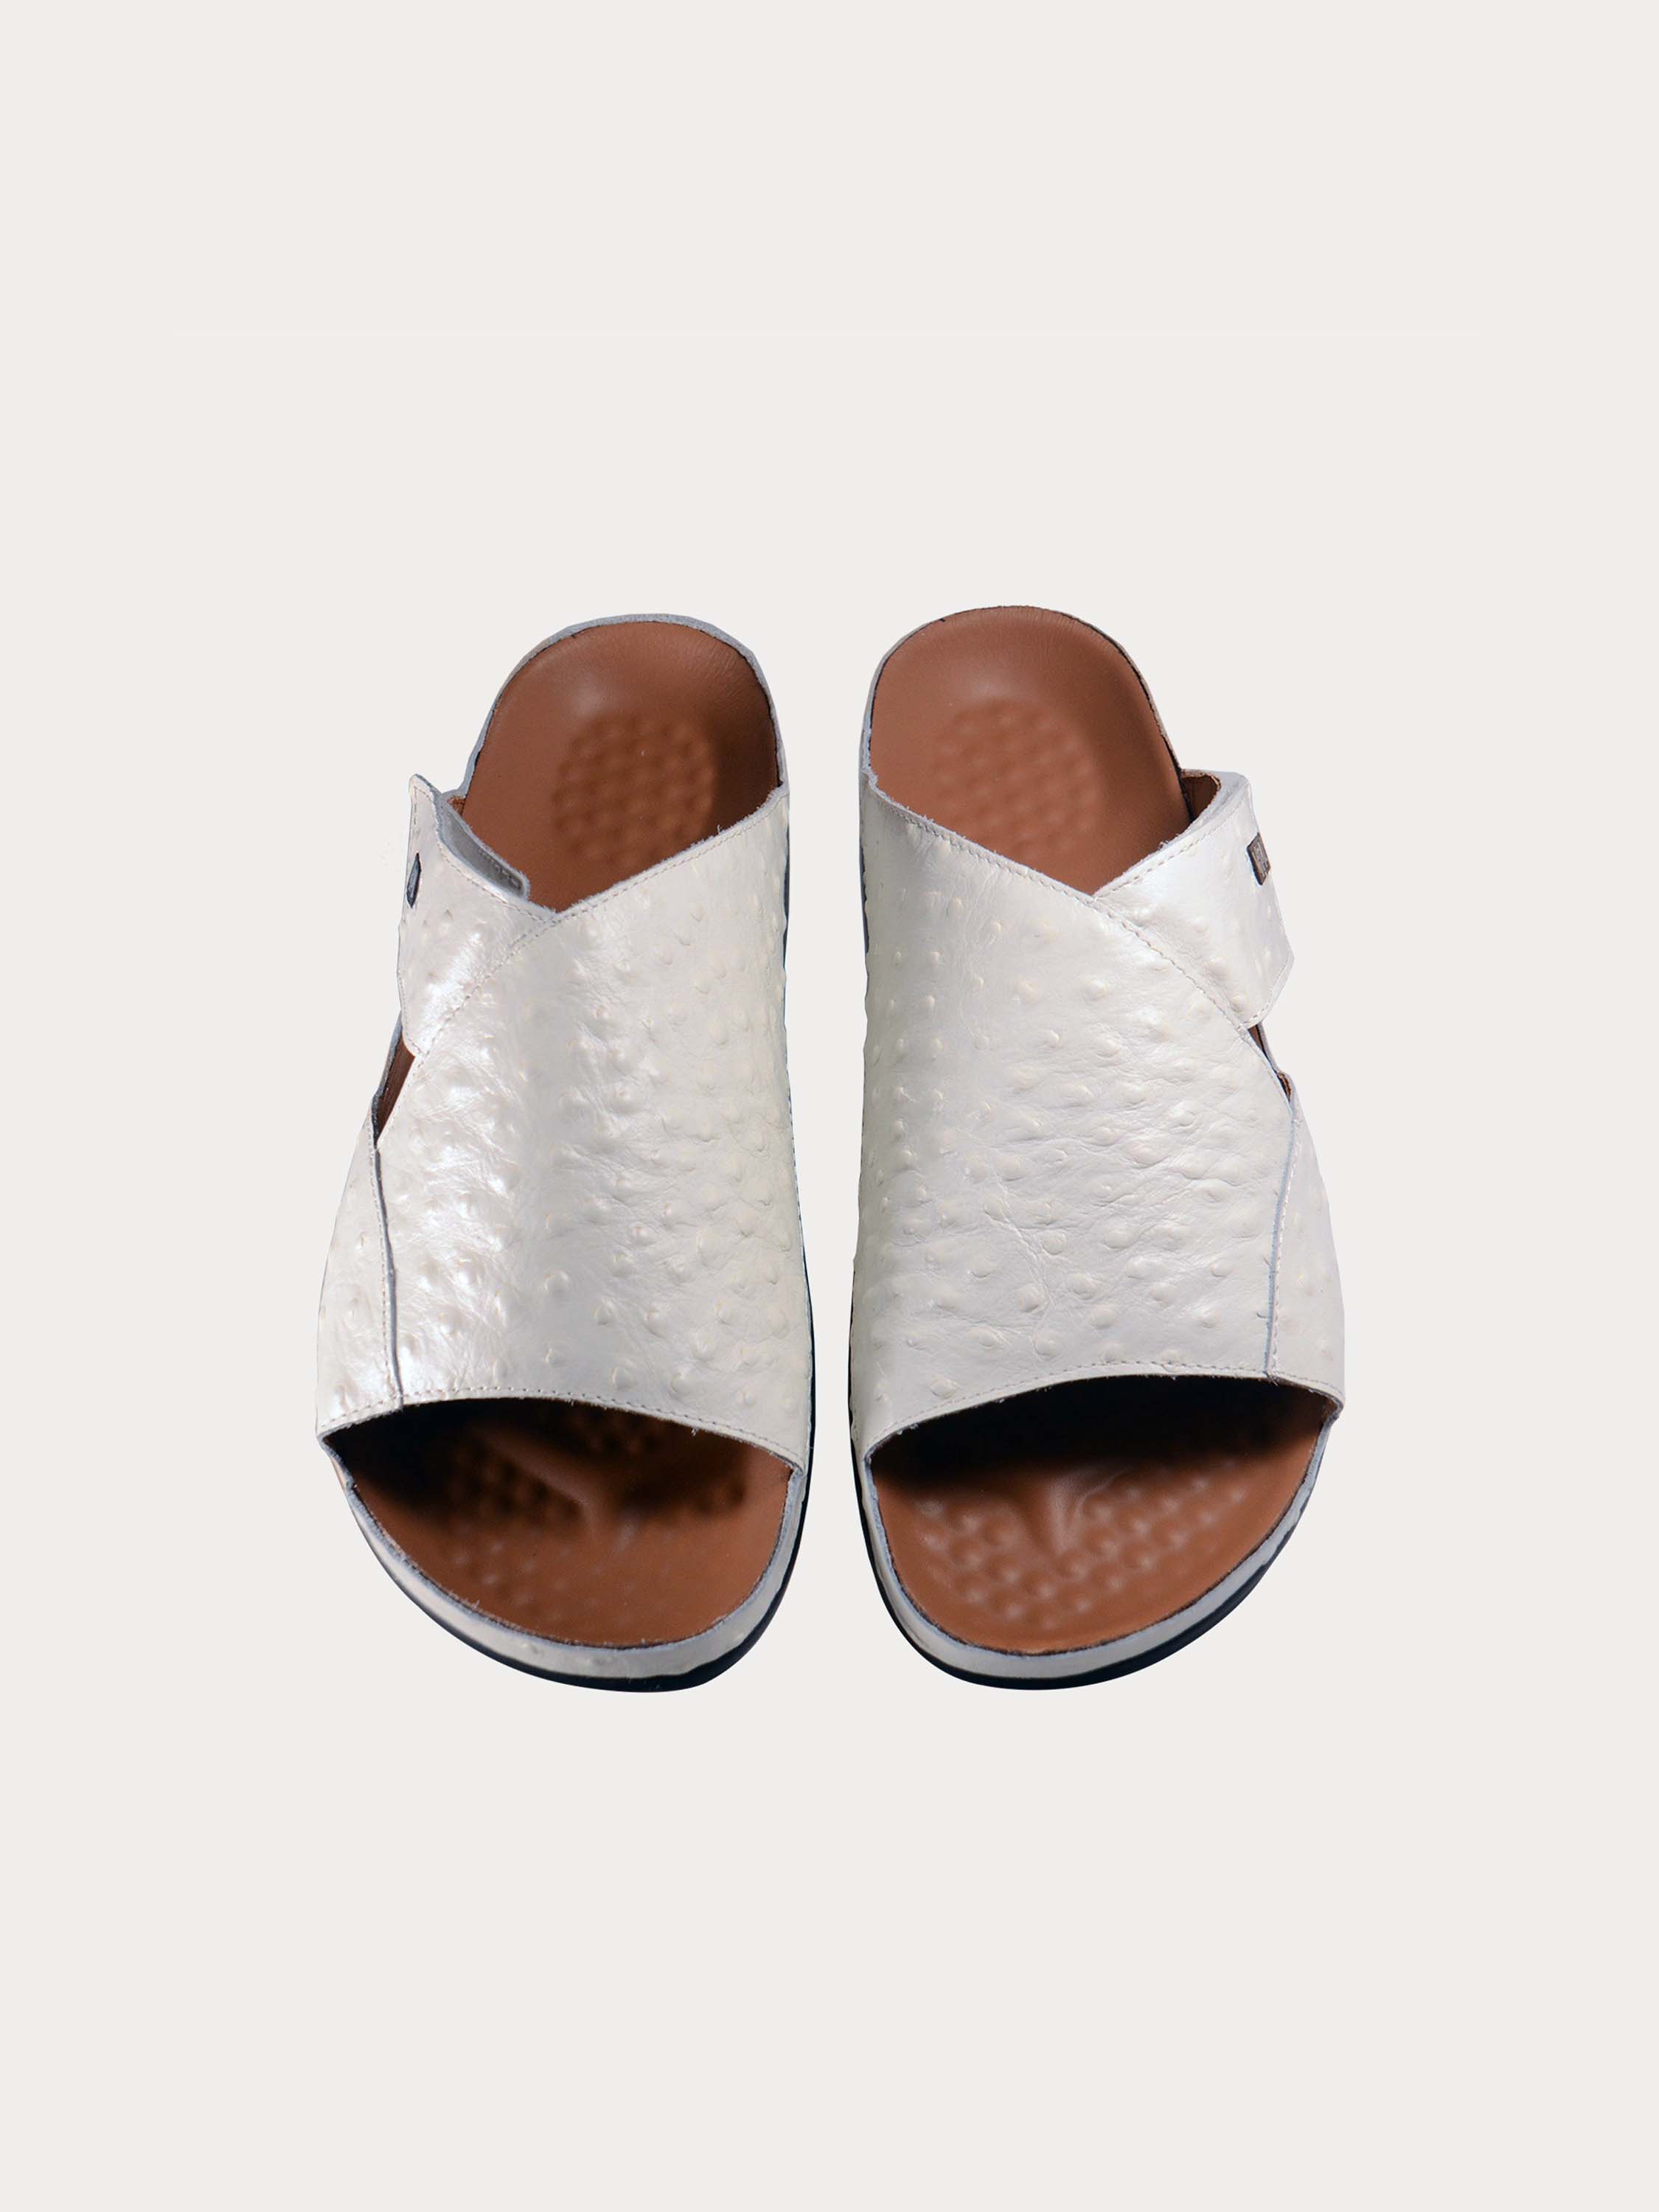 Vital Men's Pattern Leather Sandals #color_White